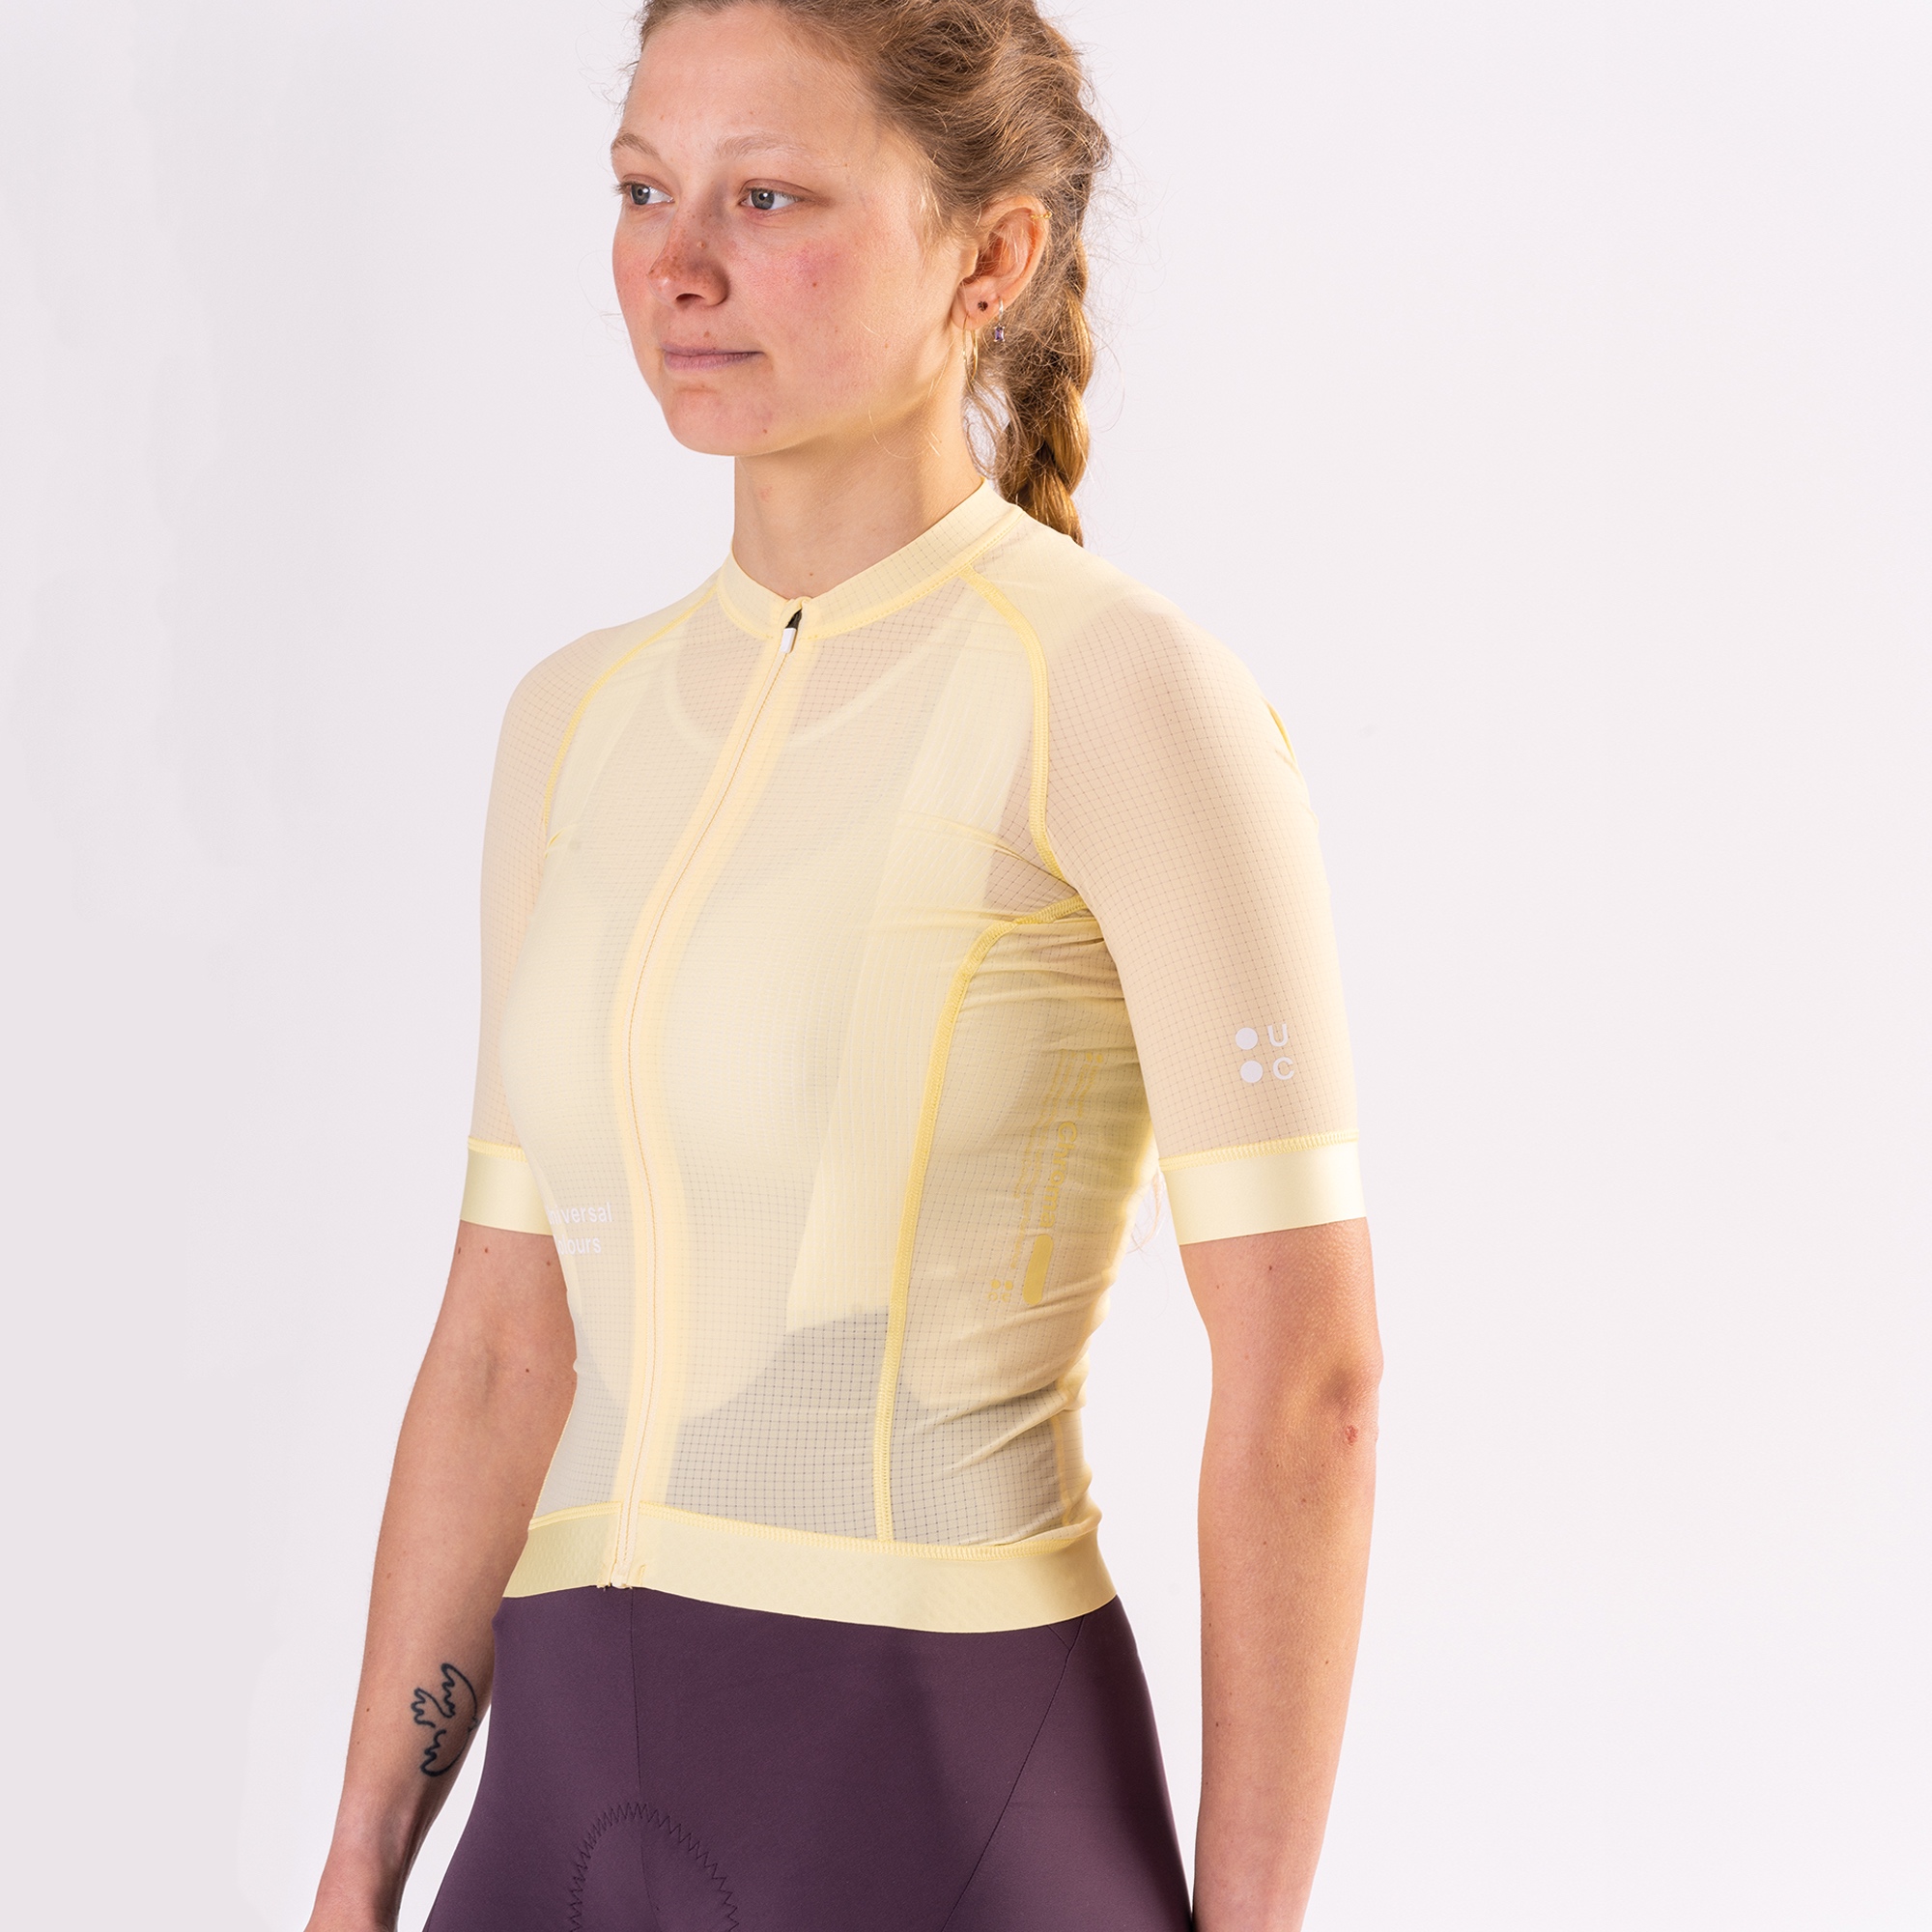 Chroma Women's Short Sleeve Jersey - Lemon Yellow